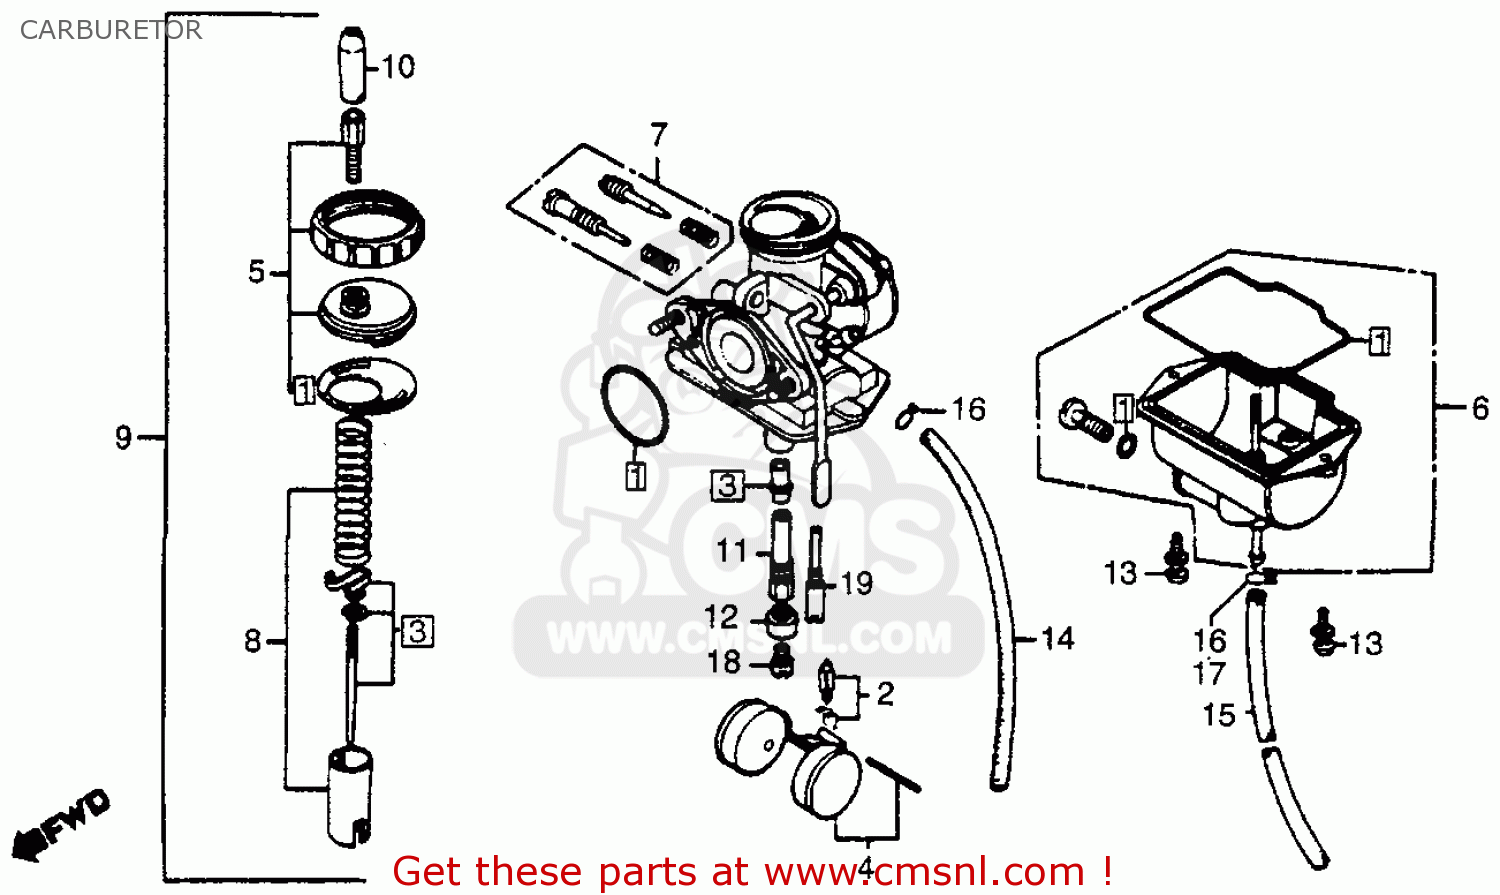 Honda xr80 carburetor settings #1